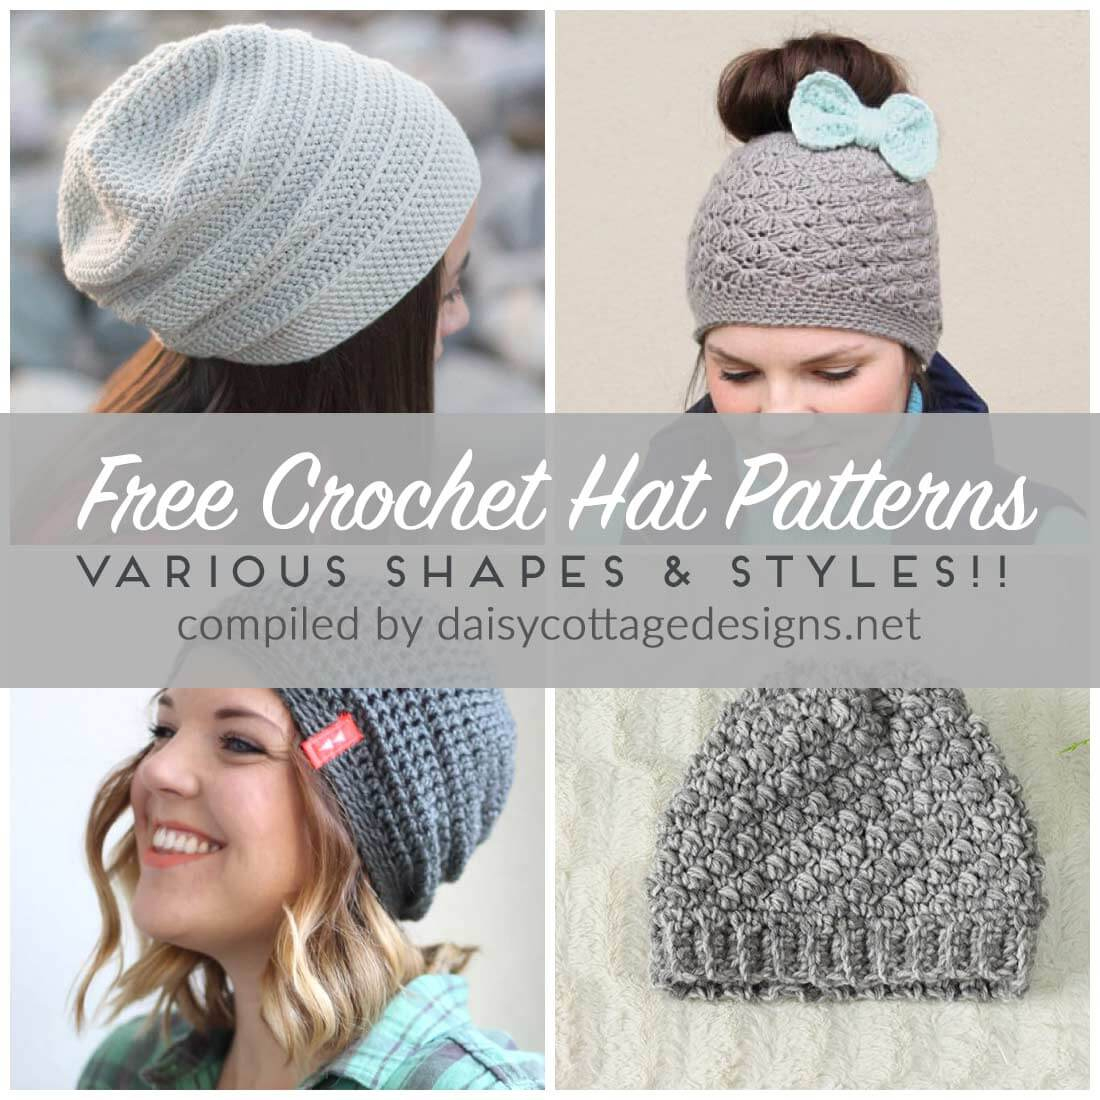 Free Crochet Hat Patterns - Daisy Cottage Designs - Free Printable Crochet Patterns